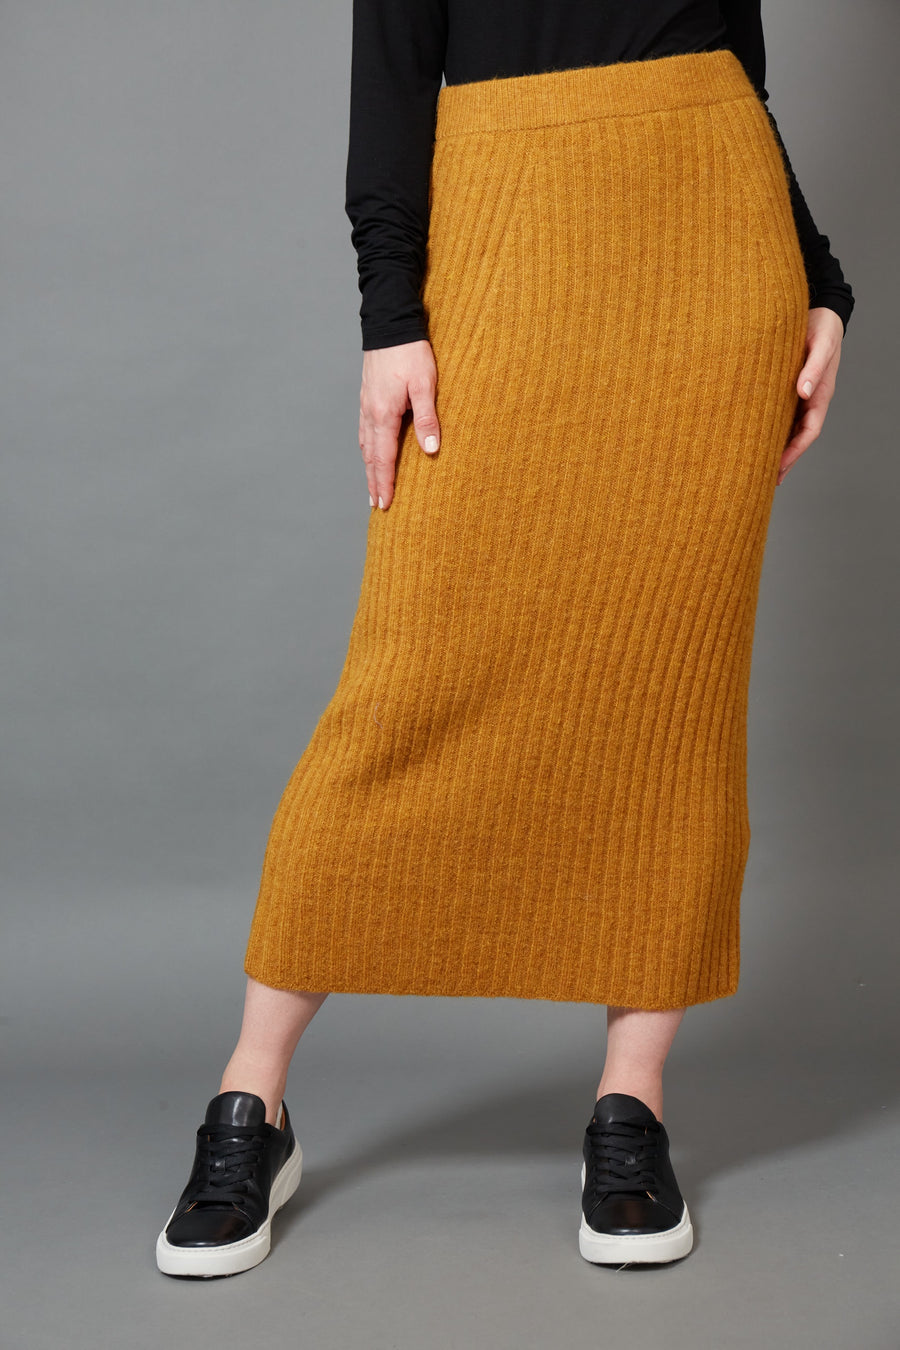 Kinsella Knit Skirt - Saffron